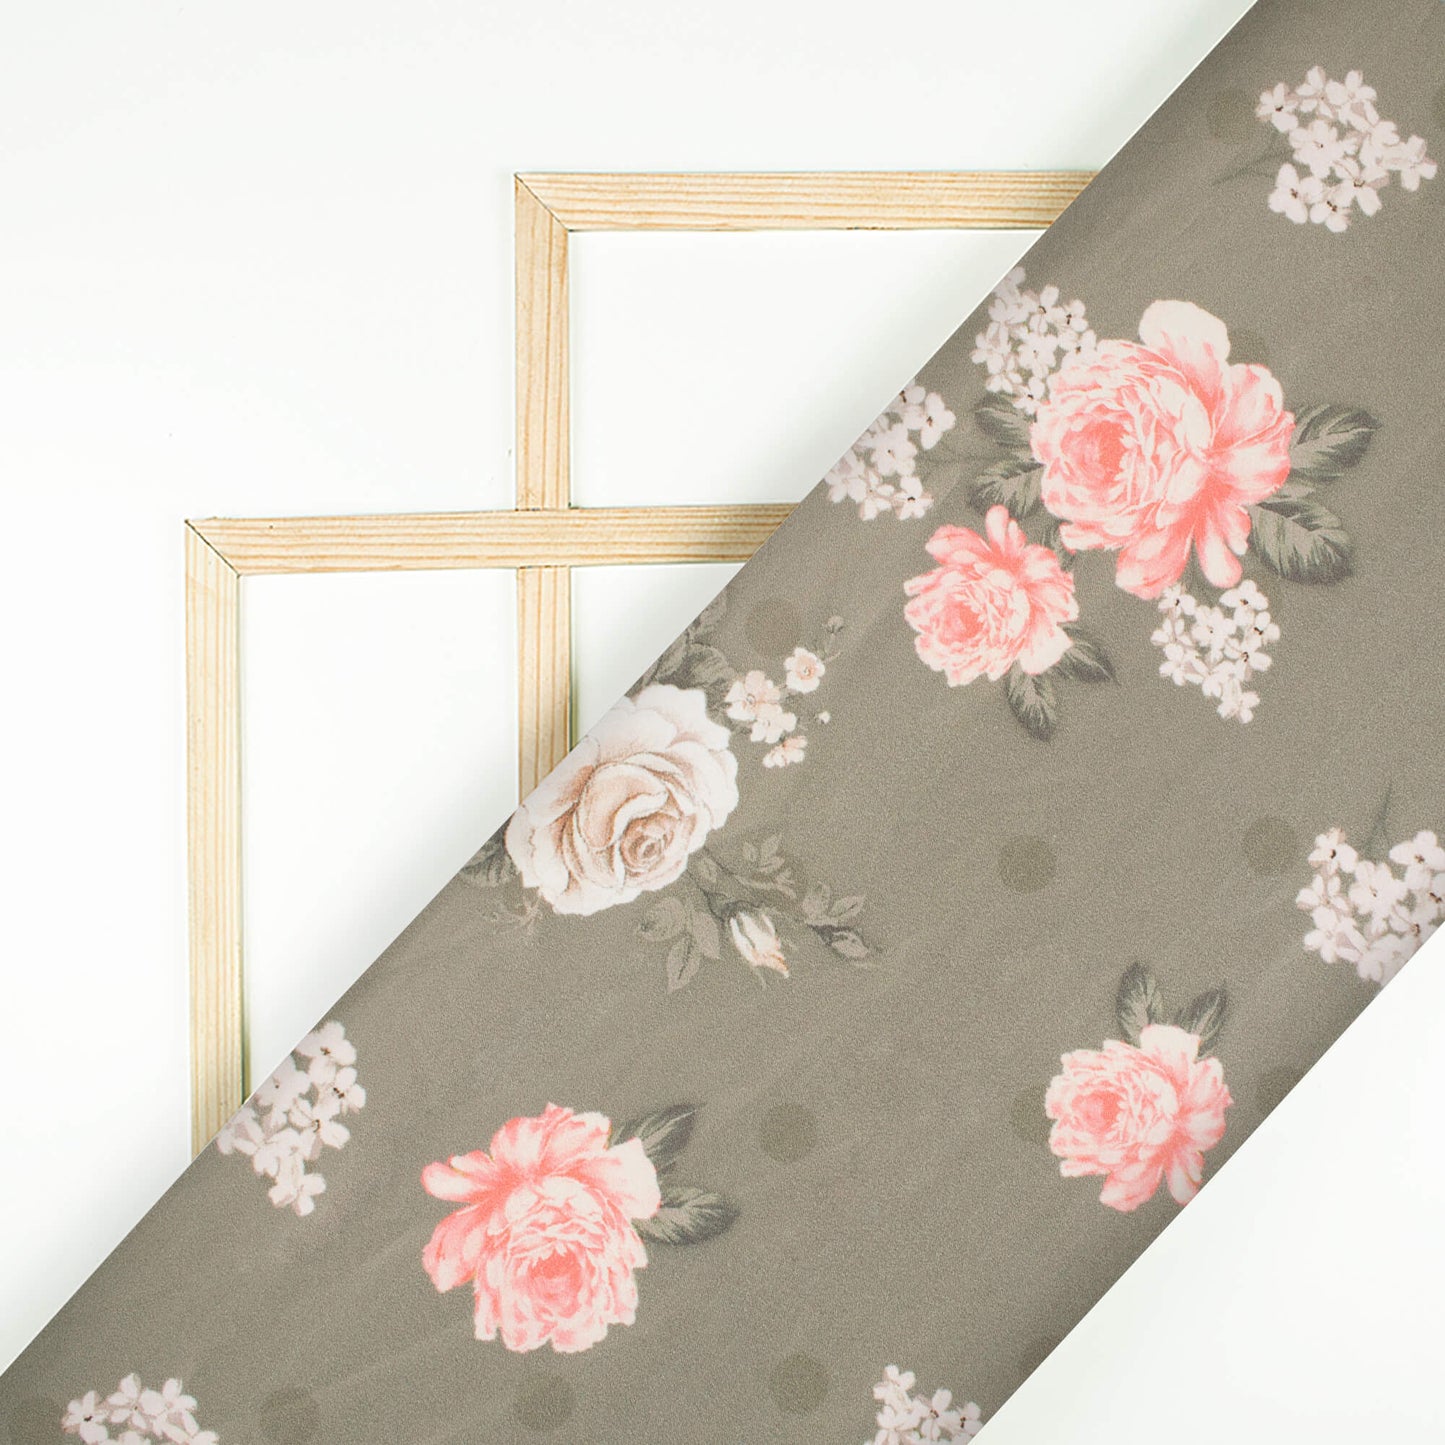 Stone Grey And Carnation Pink Floral Pattern Digital Print Lush Satin Fabric